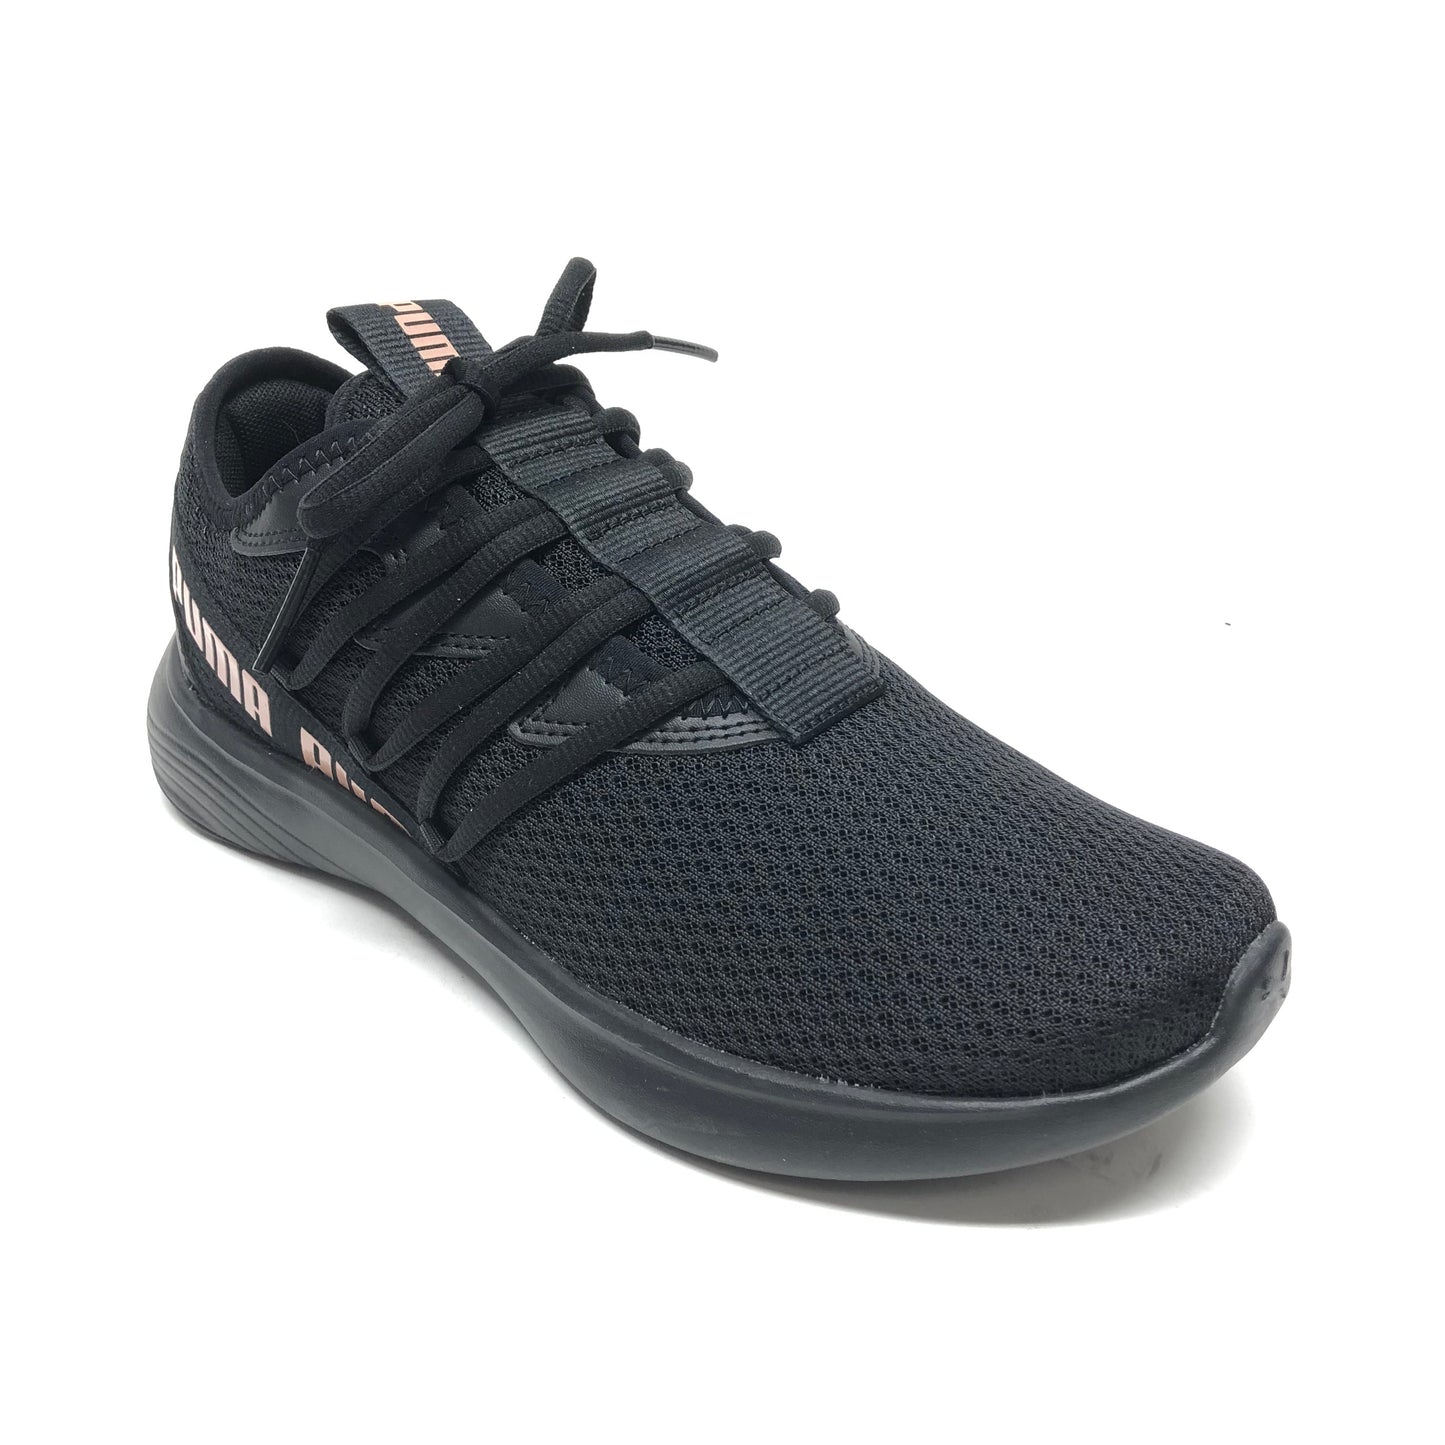 Black Shoes Athletic Puma, Size 8